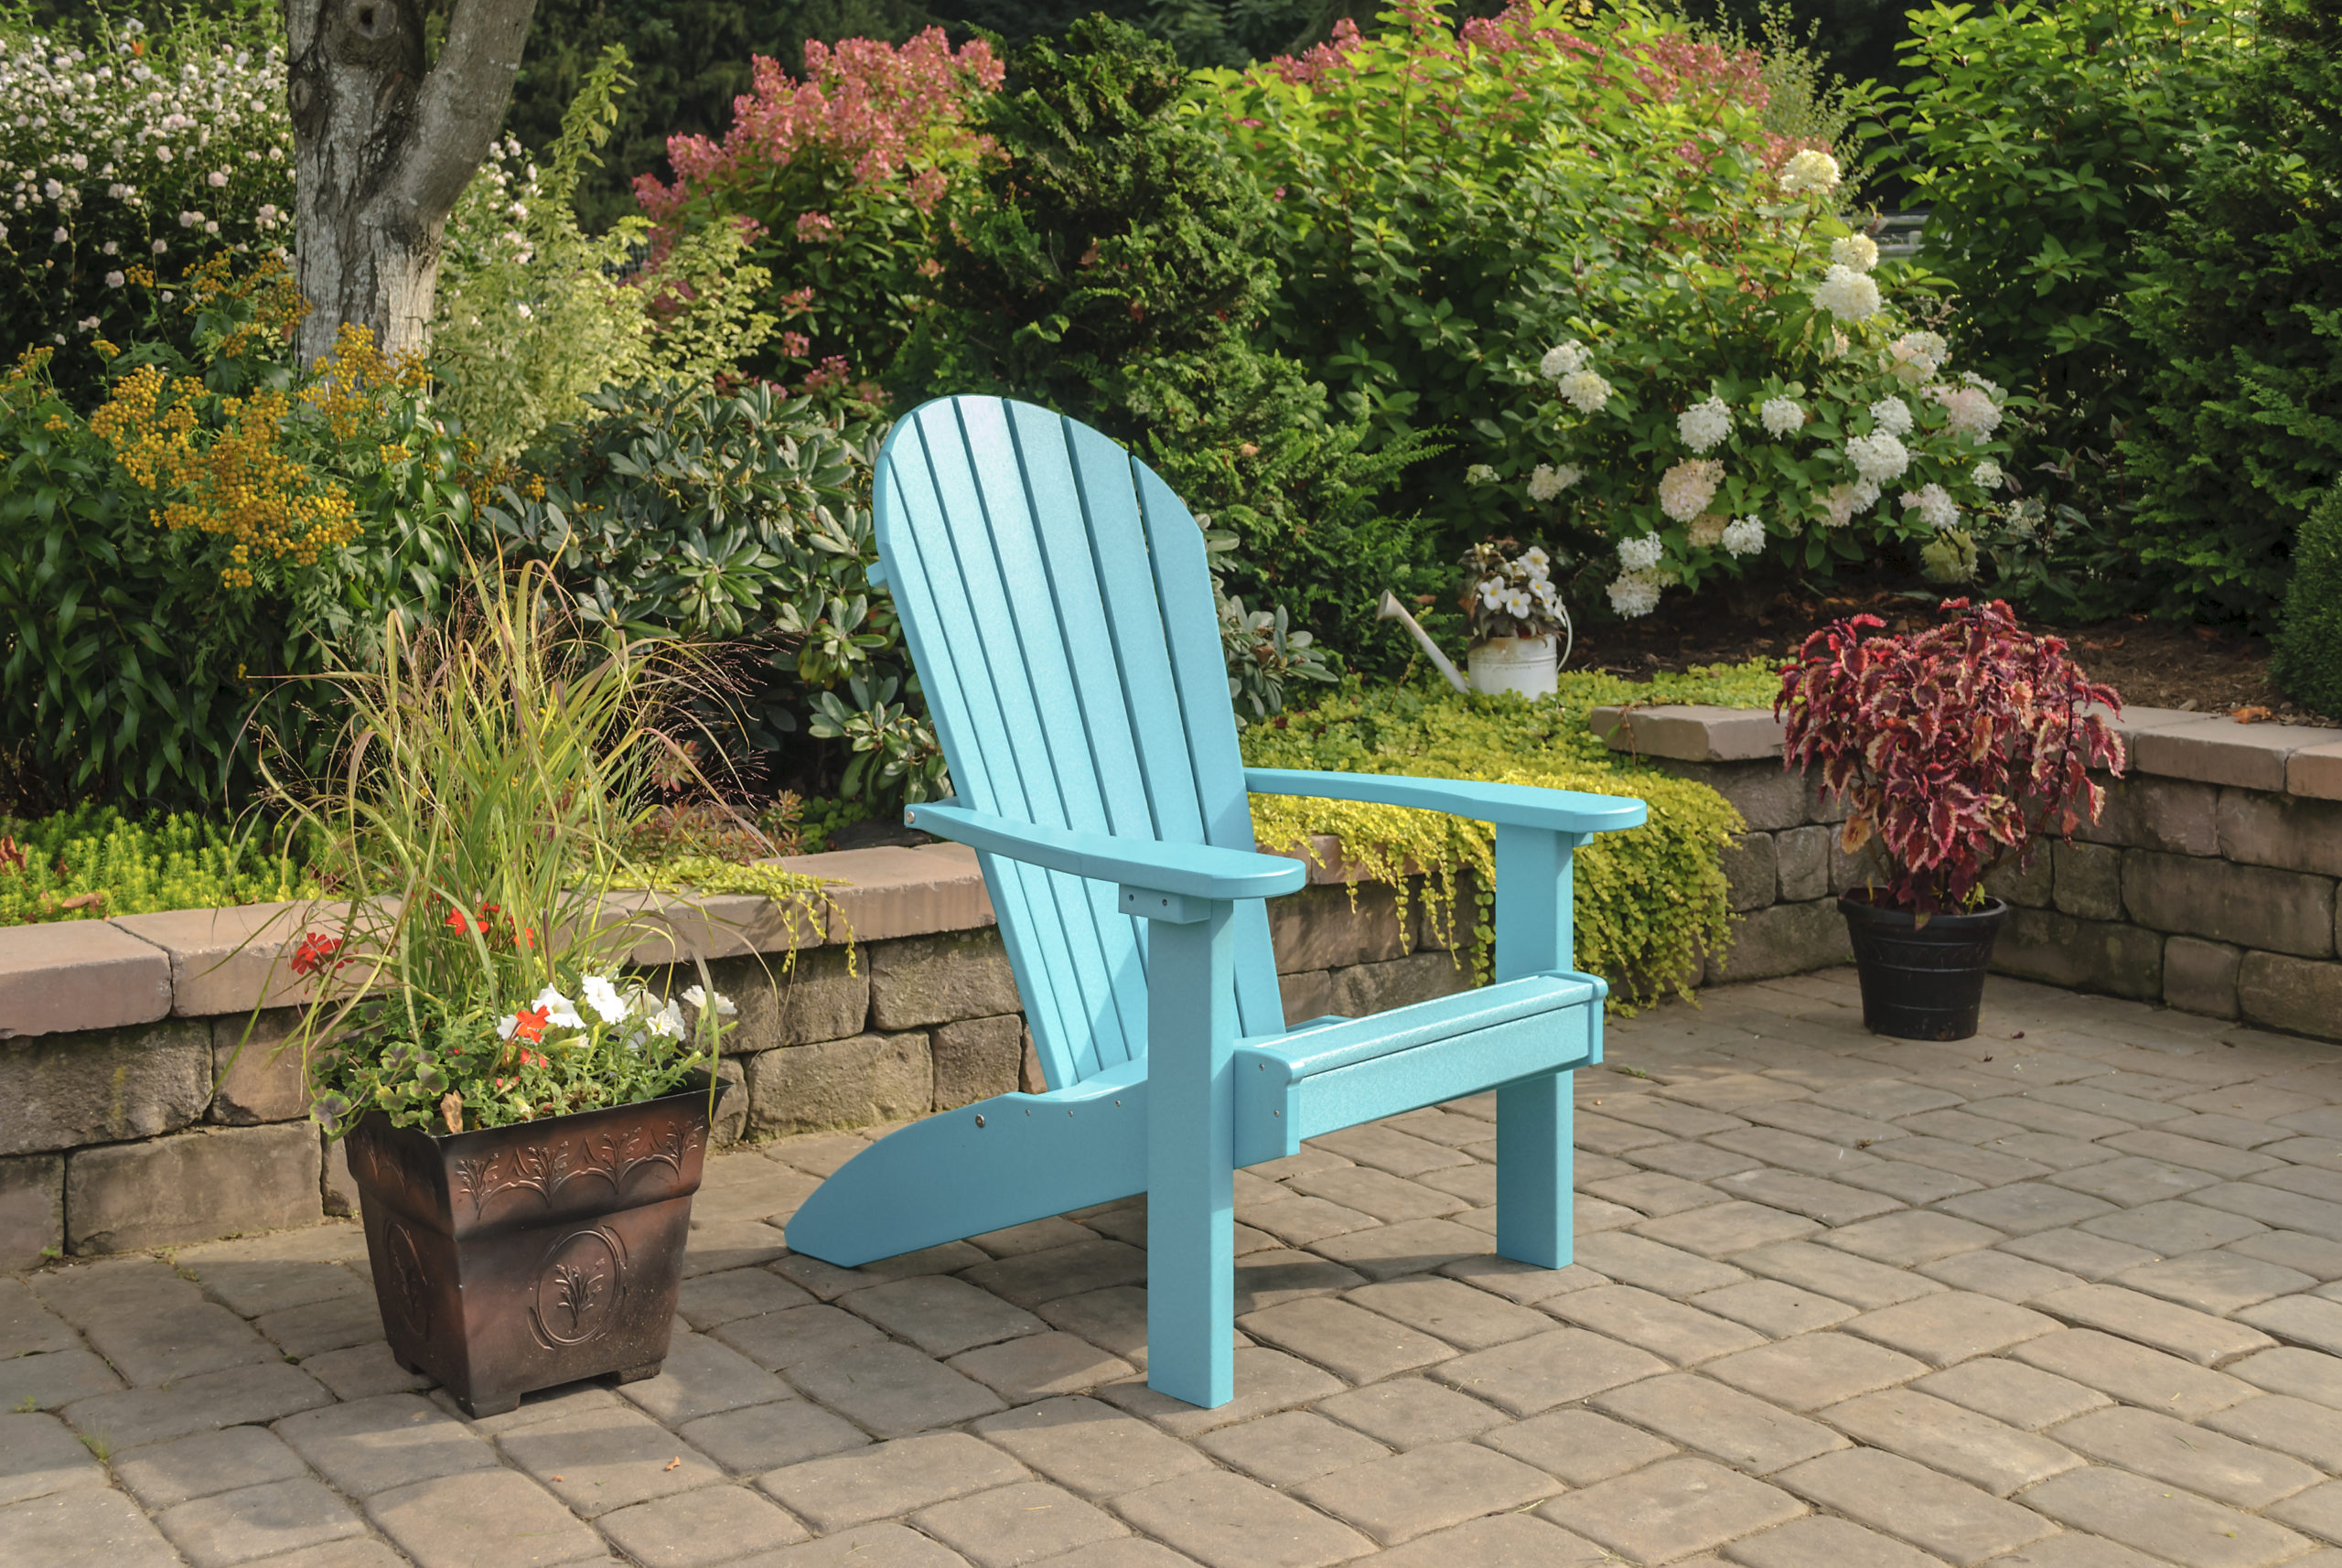 Backyard patio and bright blue poly Adirondack chair.